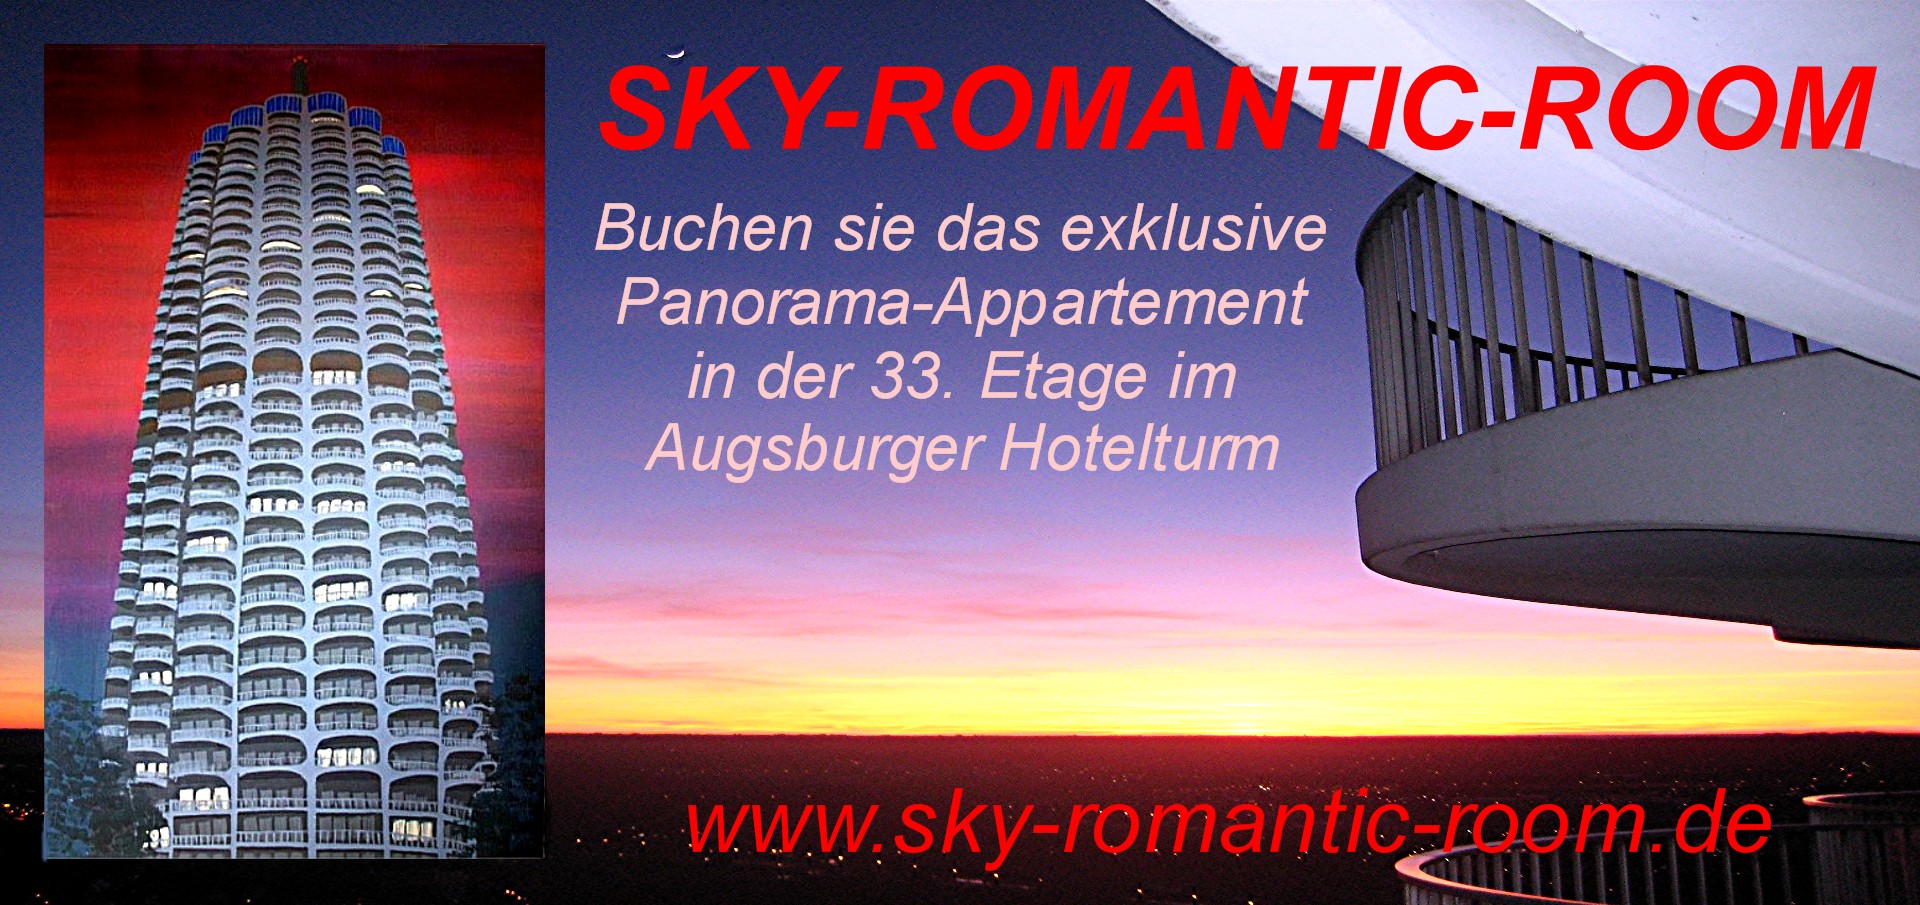 Sky-Romantic-Room Hotelturm Augsburg